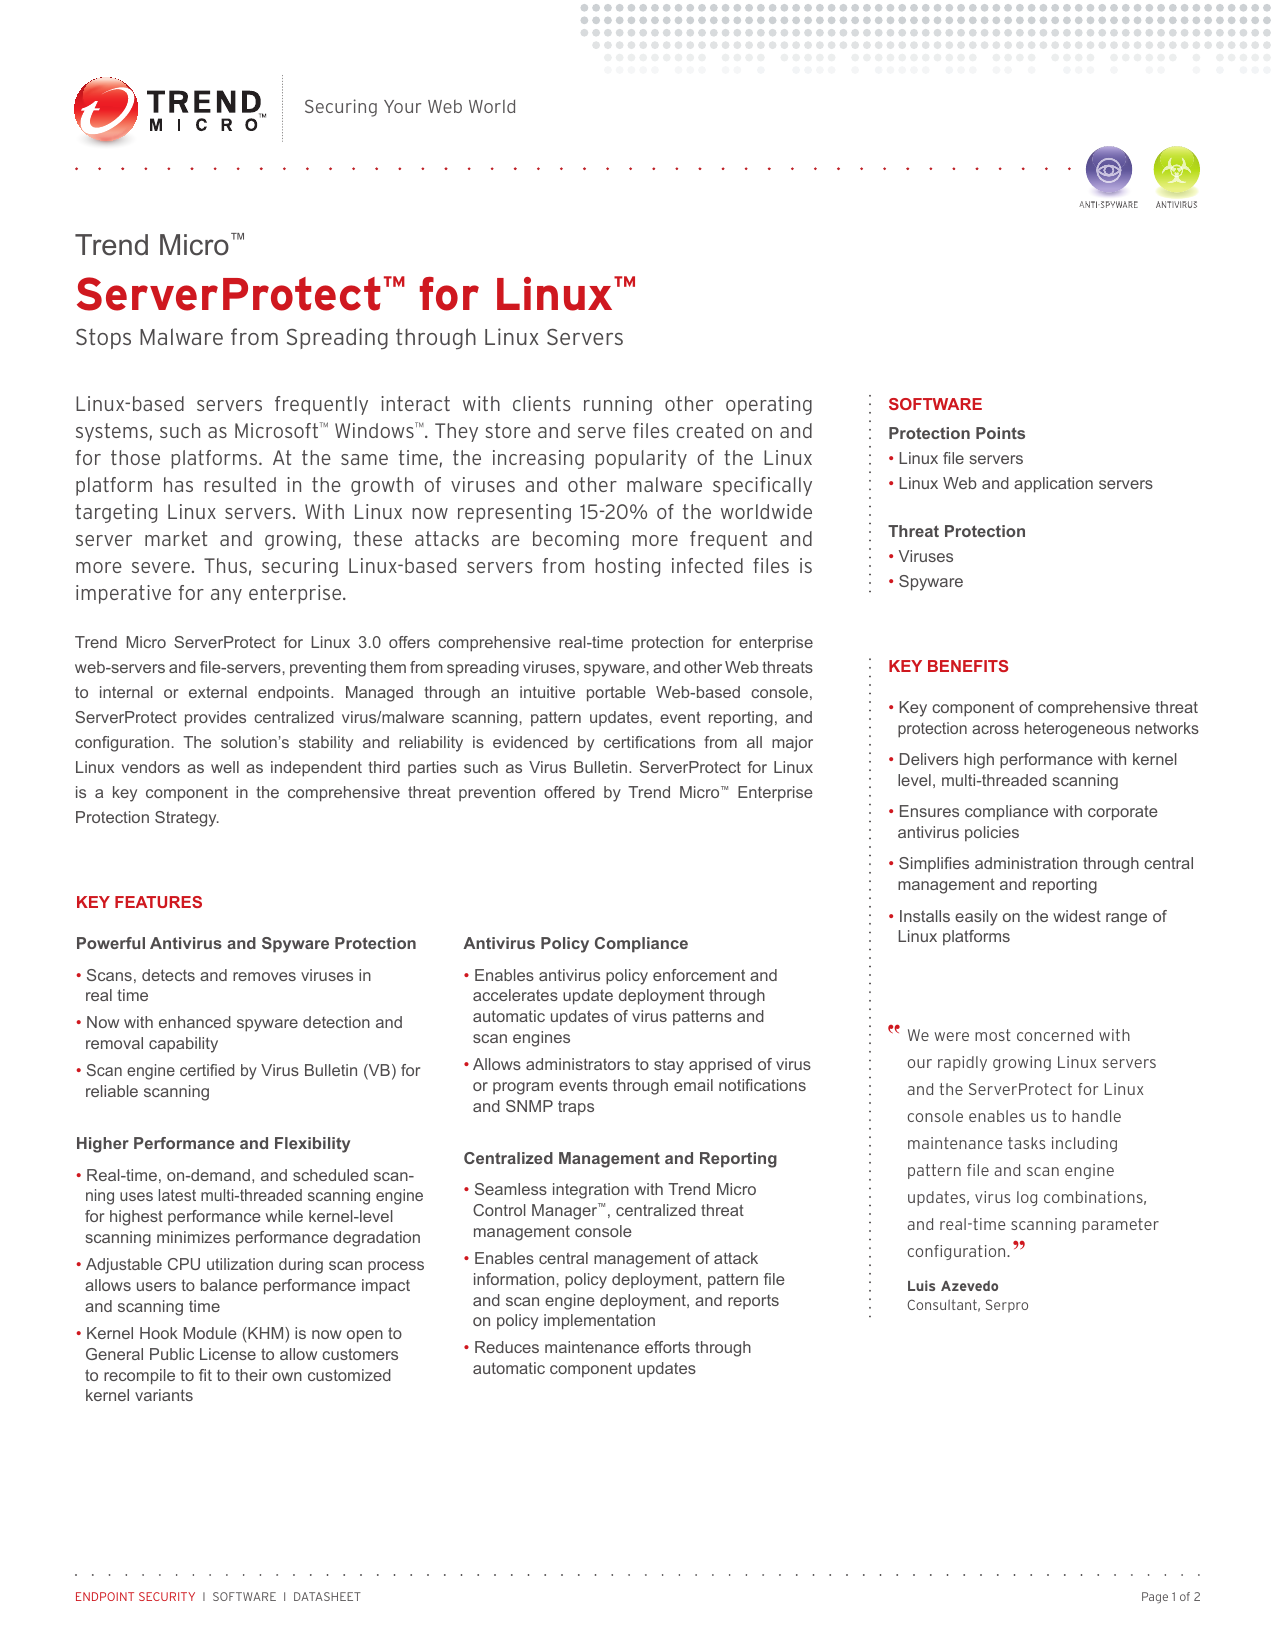 ServerProtect™ for Linux | Manualzz